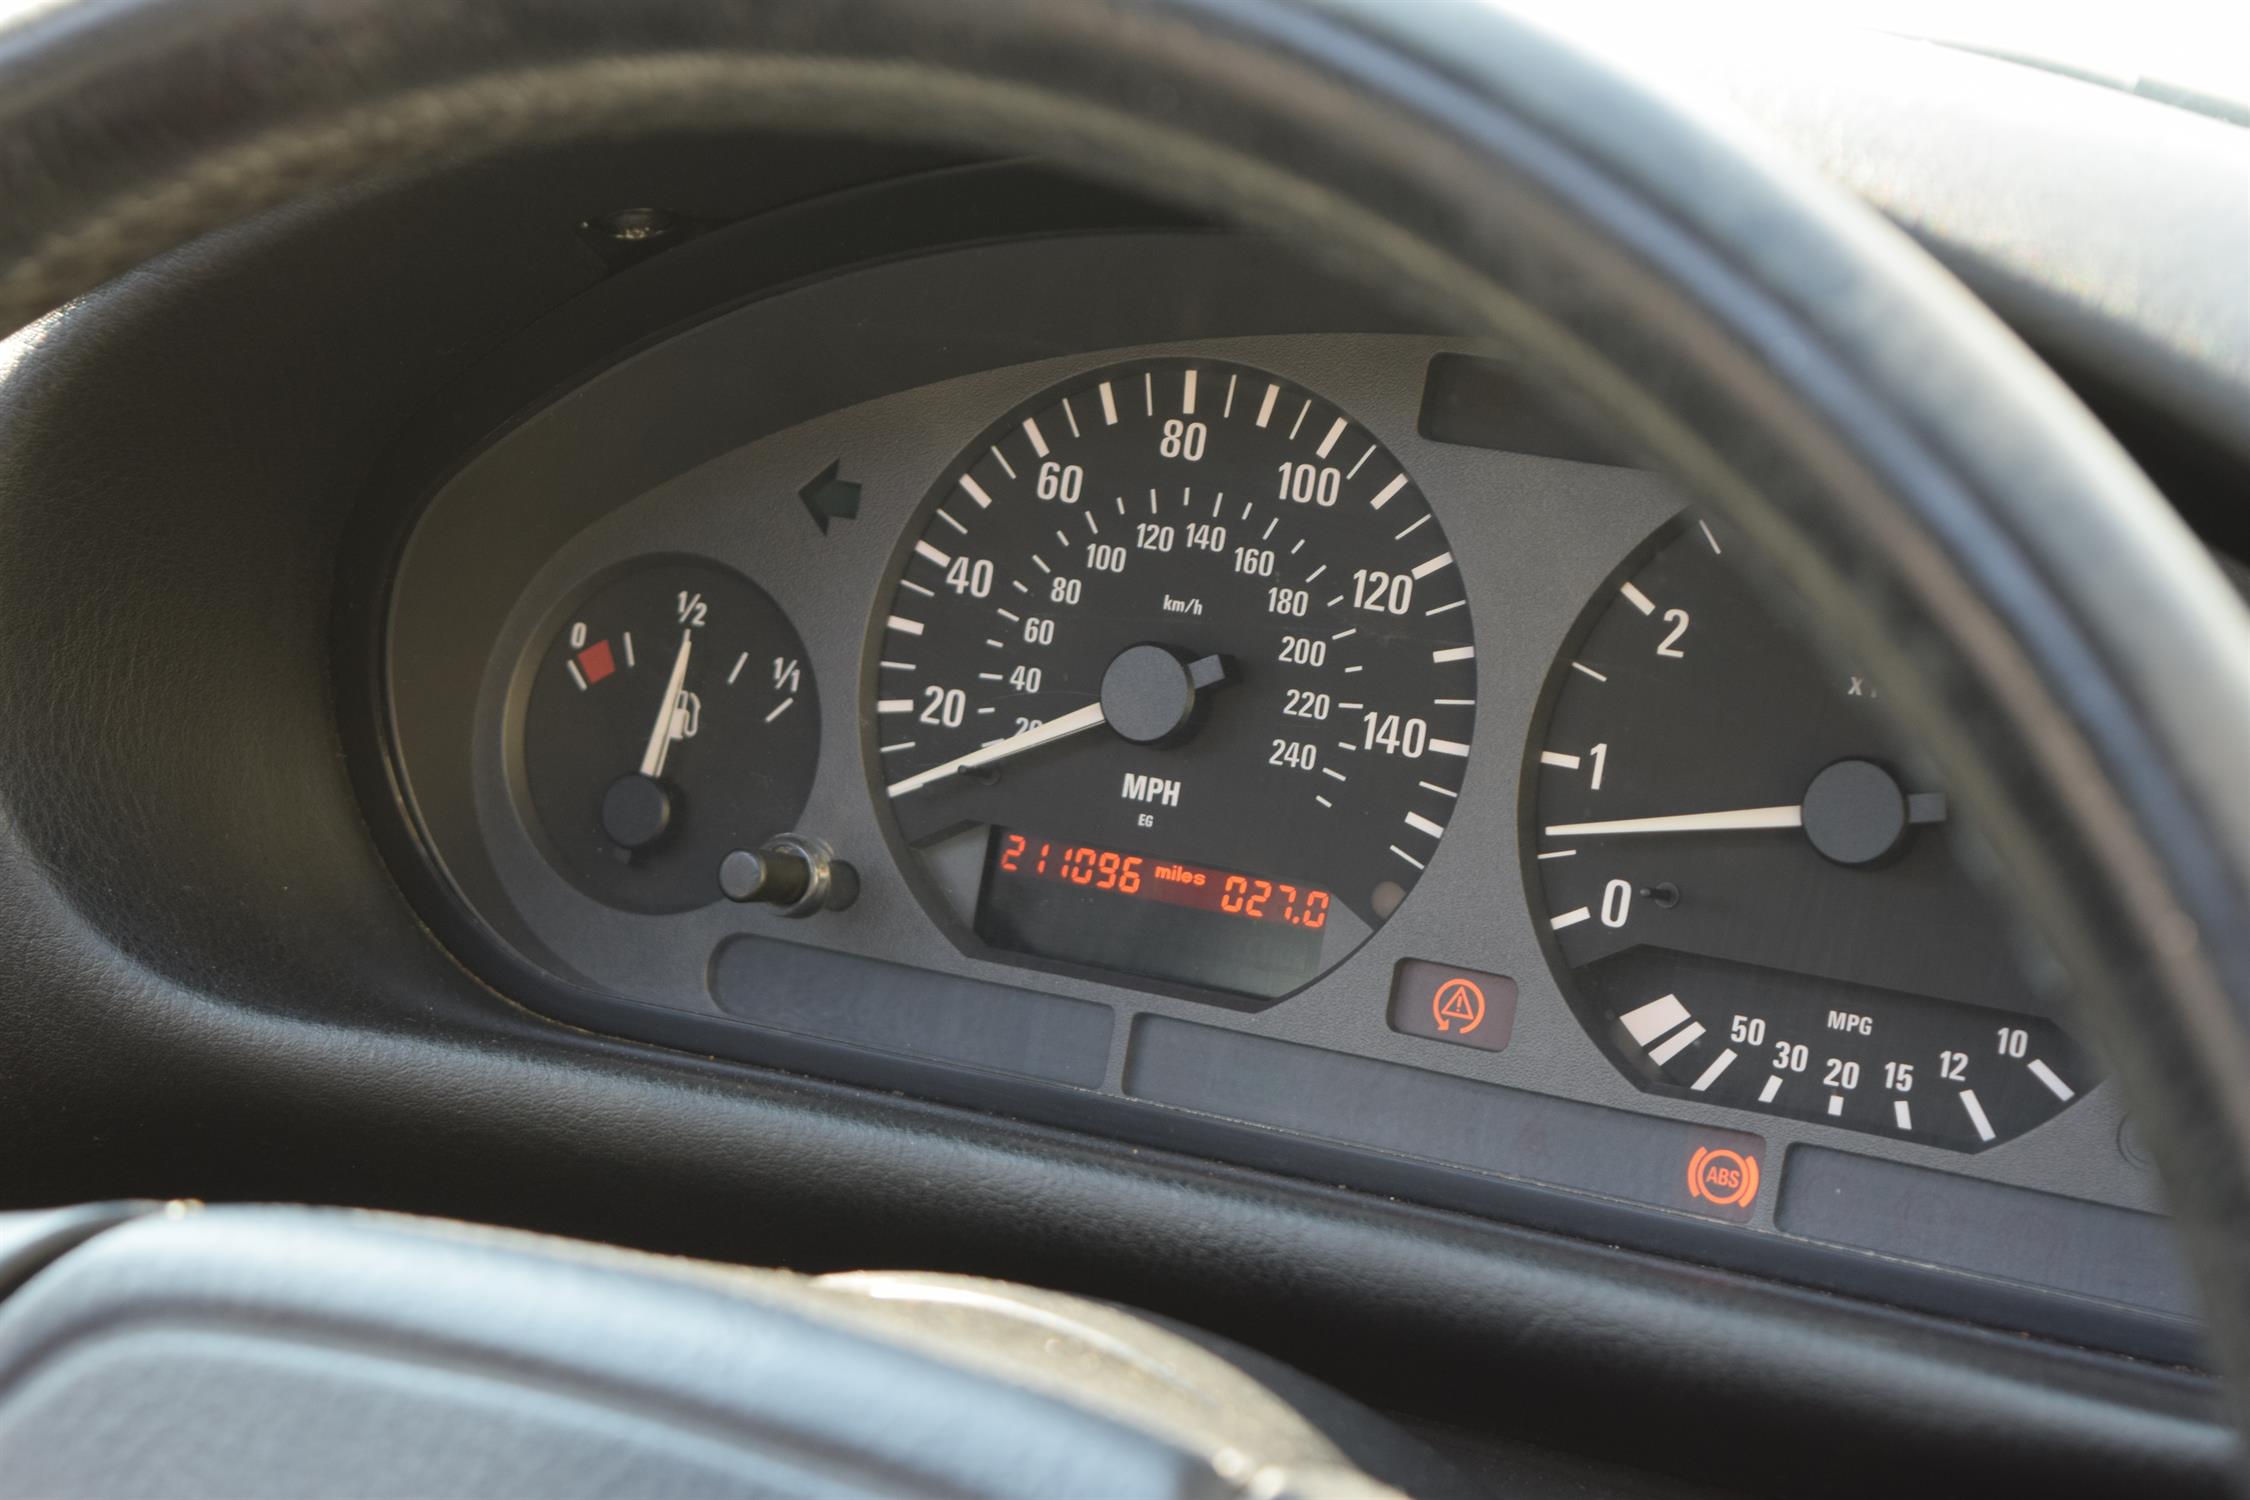 1997 BMW E36 2.5l Auto - Black on black - Odometer reading 211,000 miles, MOT’d until September - Image 11 of 20